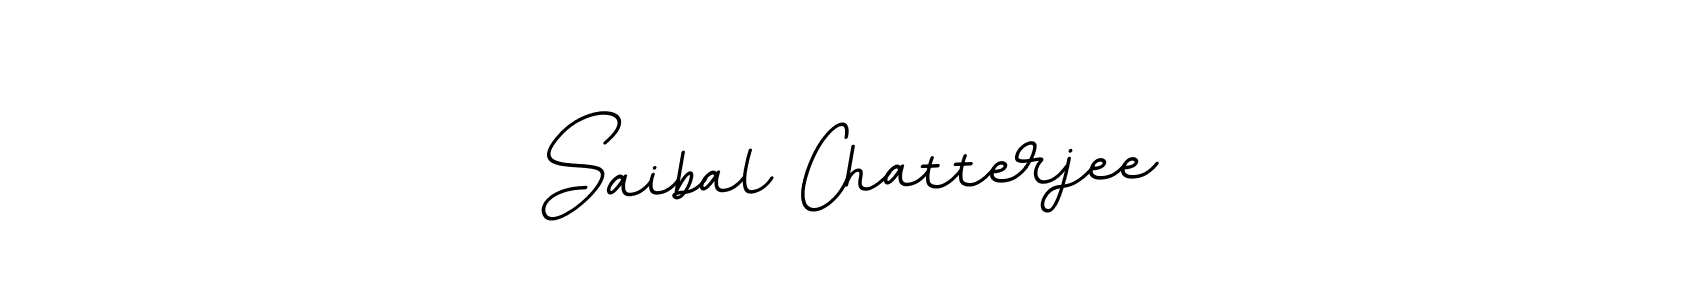 How to Draw Saibal Chatterjee signature style? BallpointsItalic-DORy9 is a latest design signature styles for name Saibal Chatterjee. Saibal Chatterjee signature style 11 images and pictures png